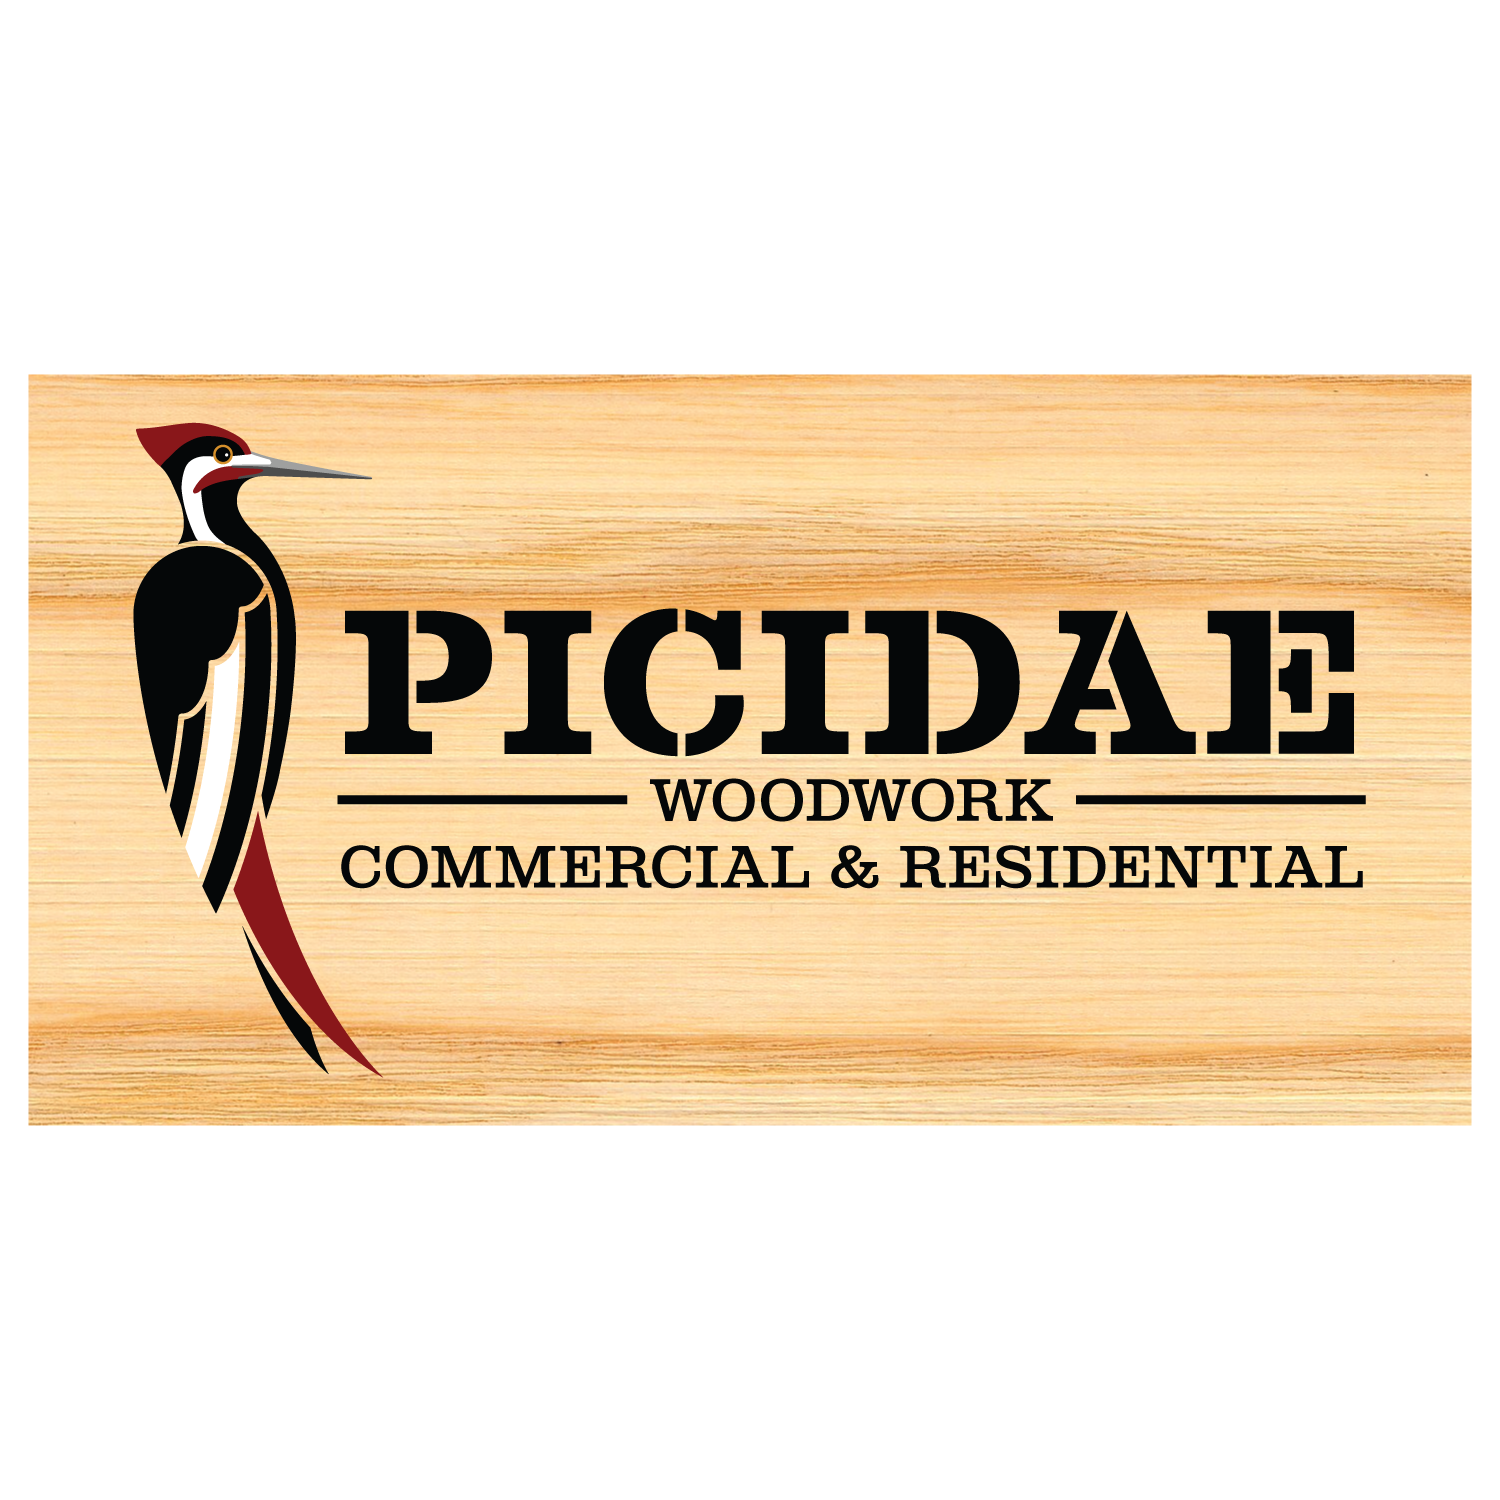 Picidae Woodwork Logo